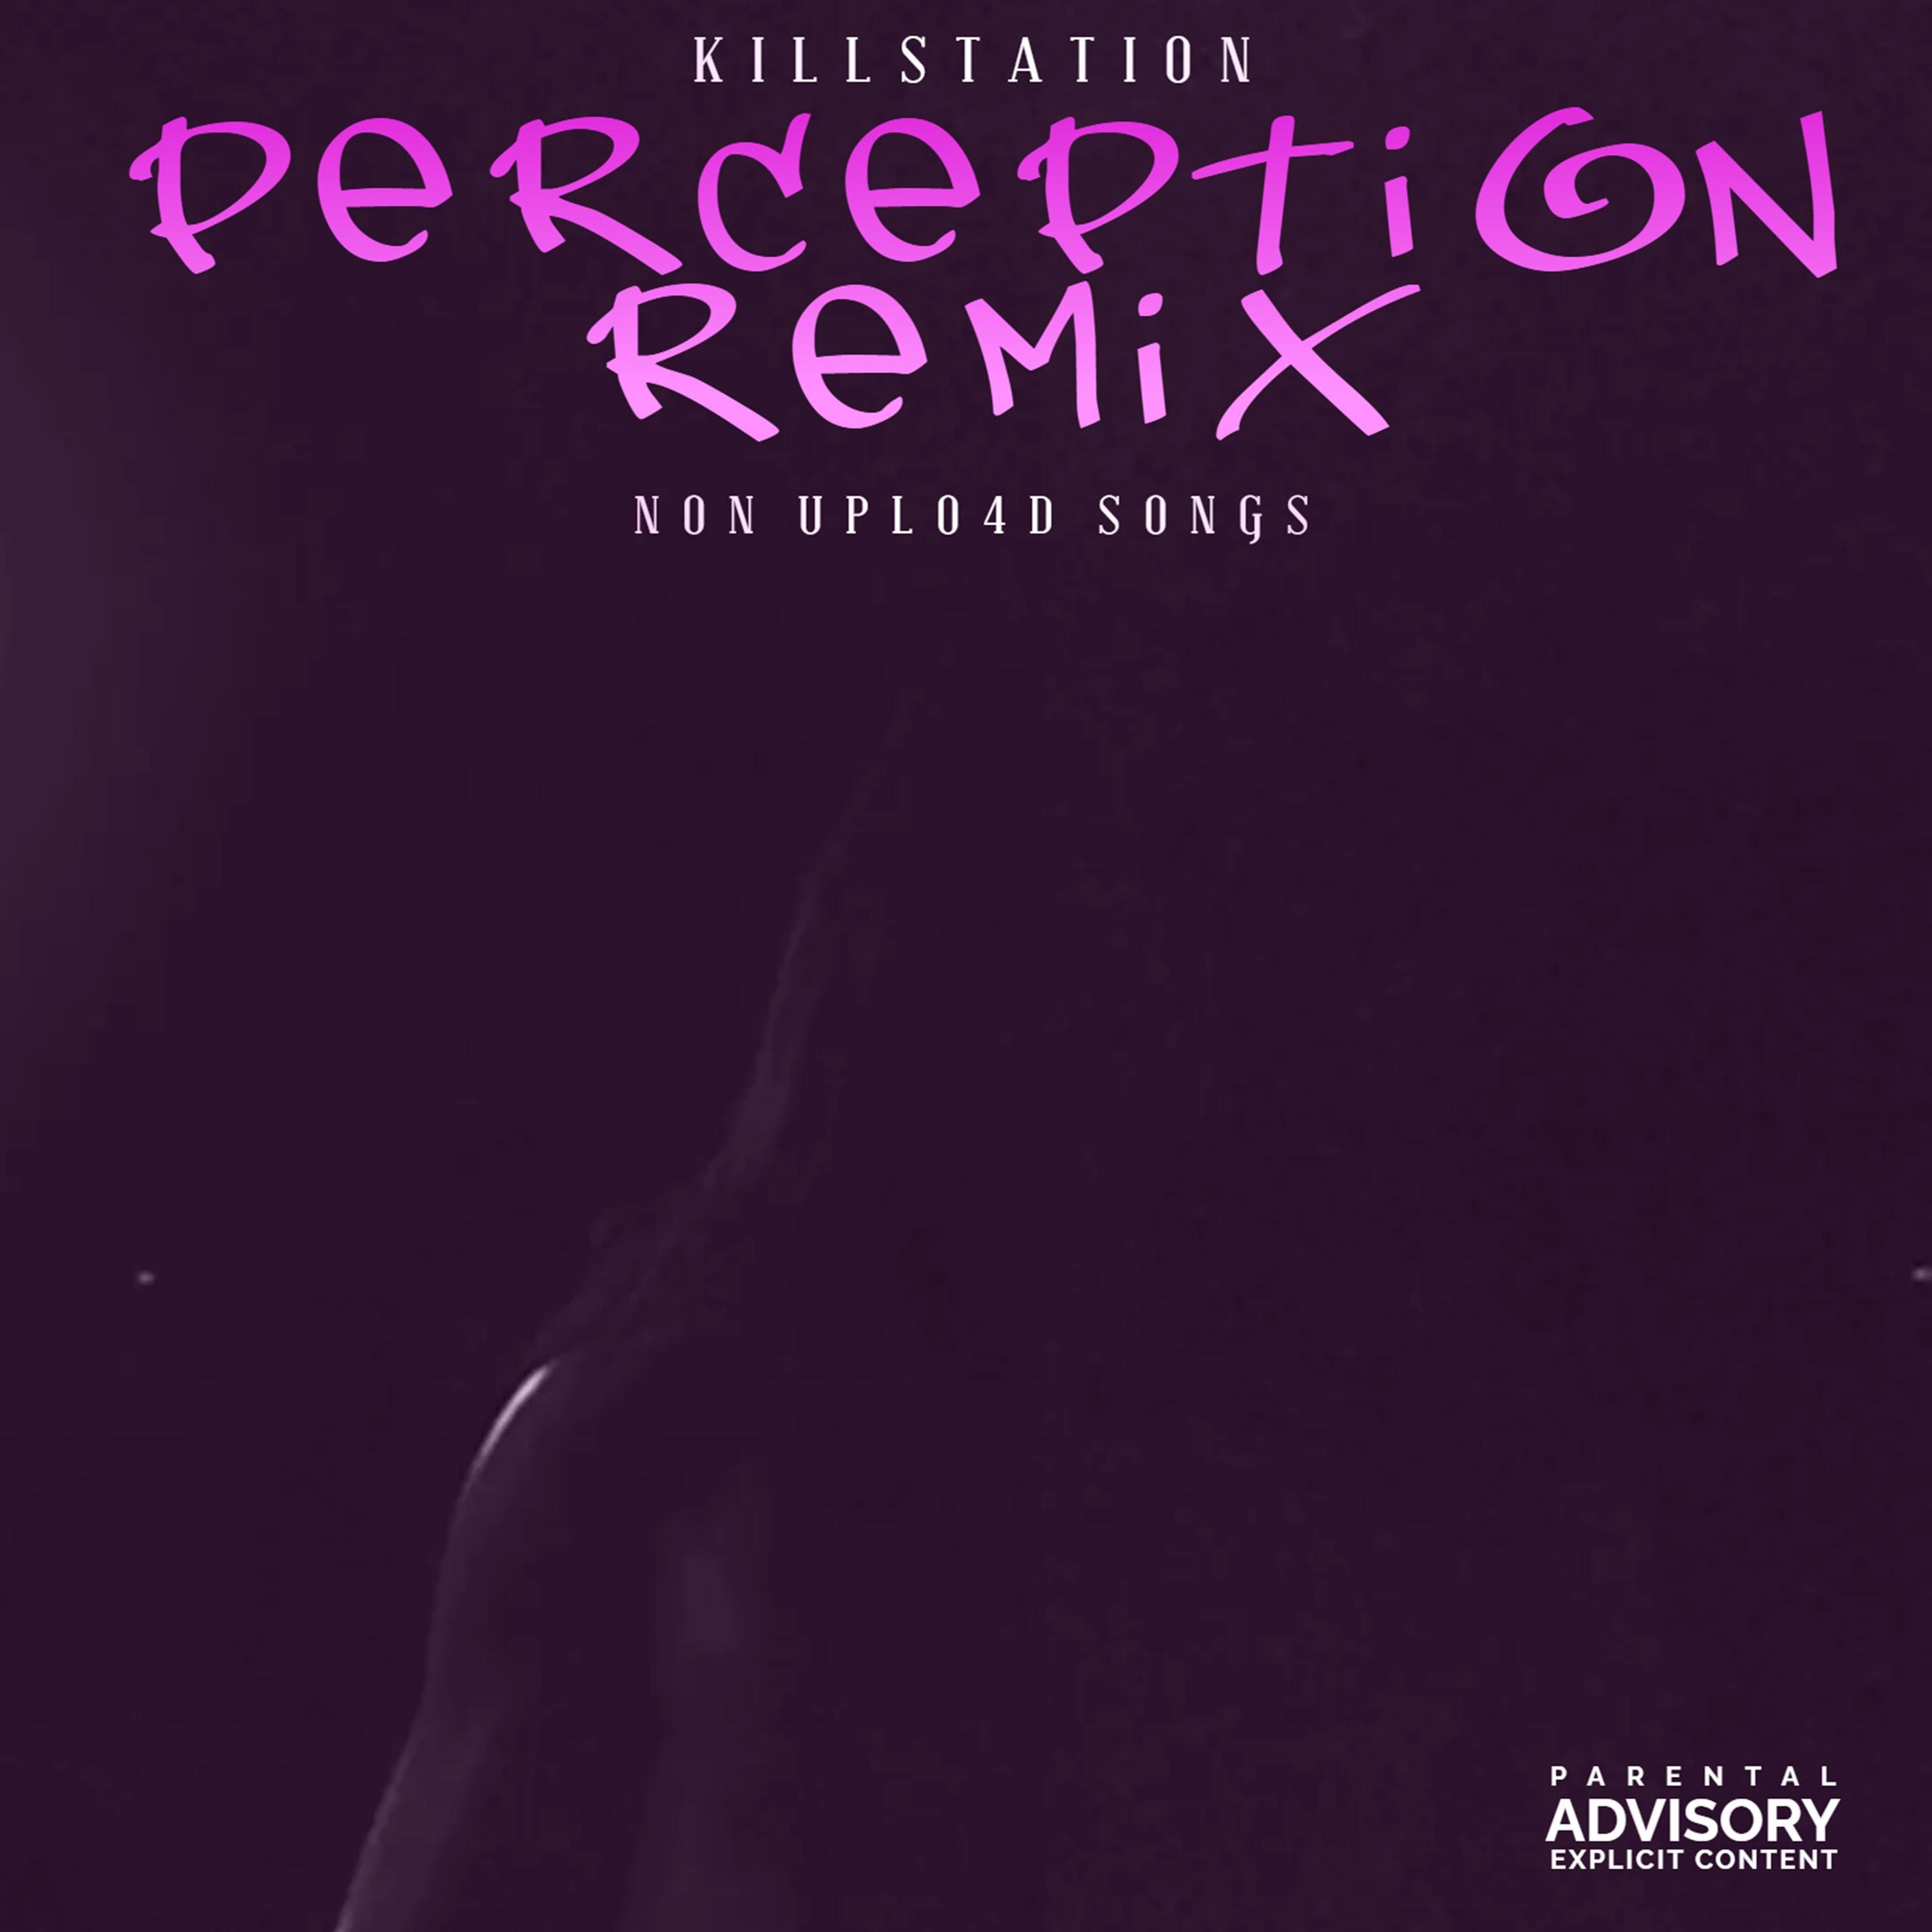 N0N UPL04D SONGS - Perception (feat. Killstation) (Retrofriend Remix)